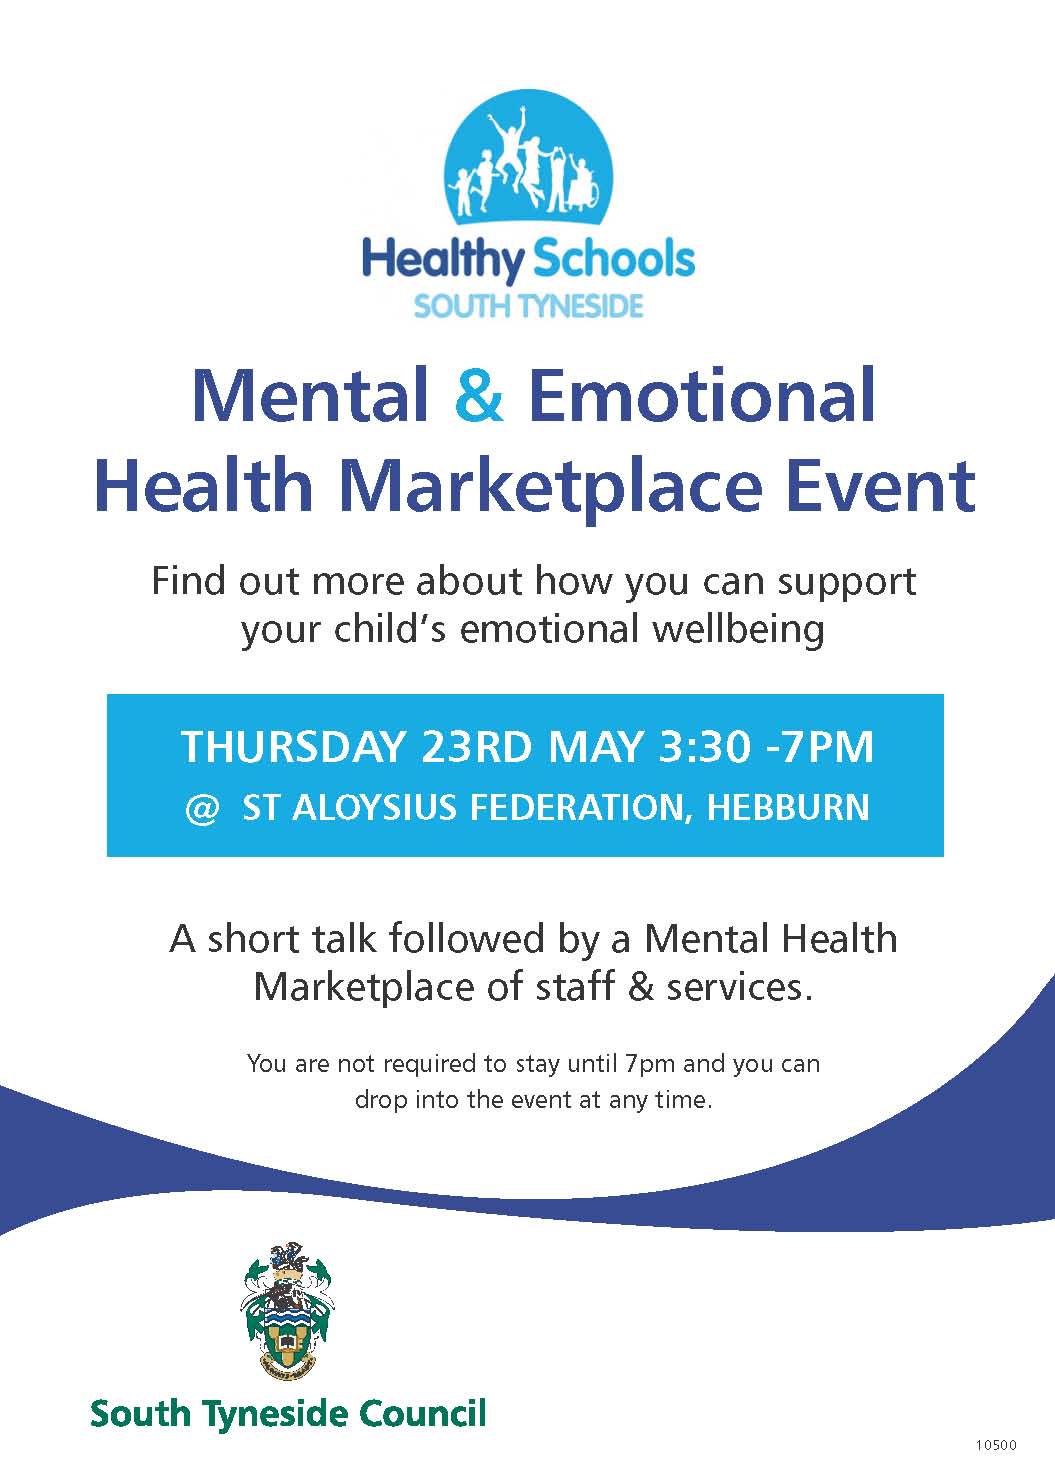 Mental and Emotional Health Event @ St Aloysius Federation